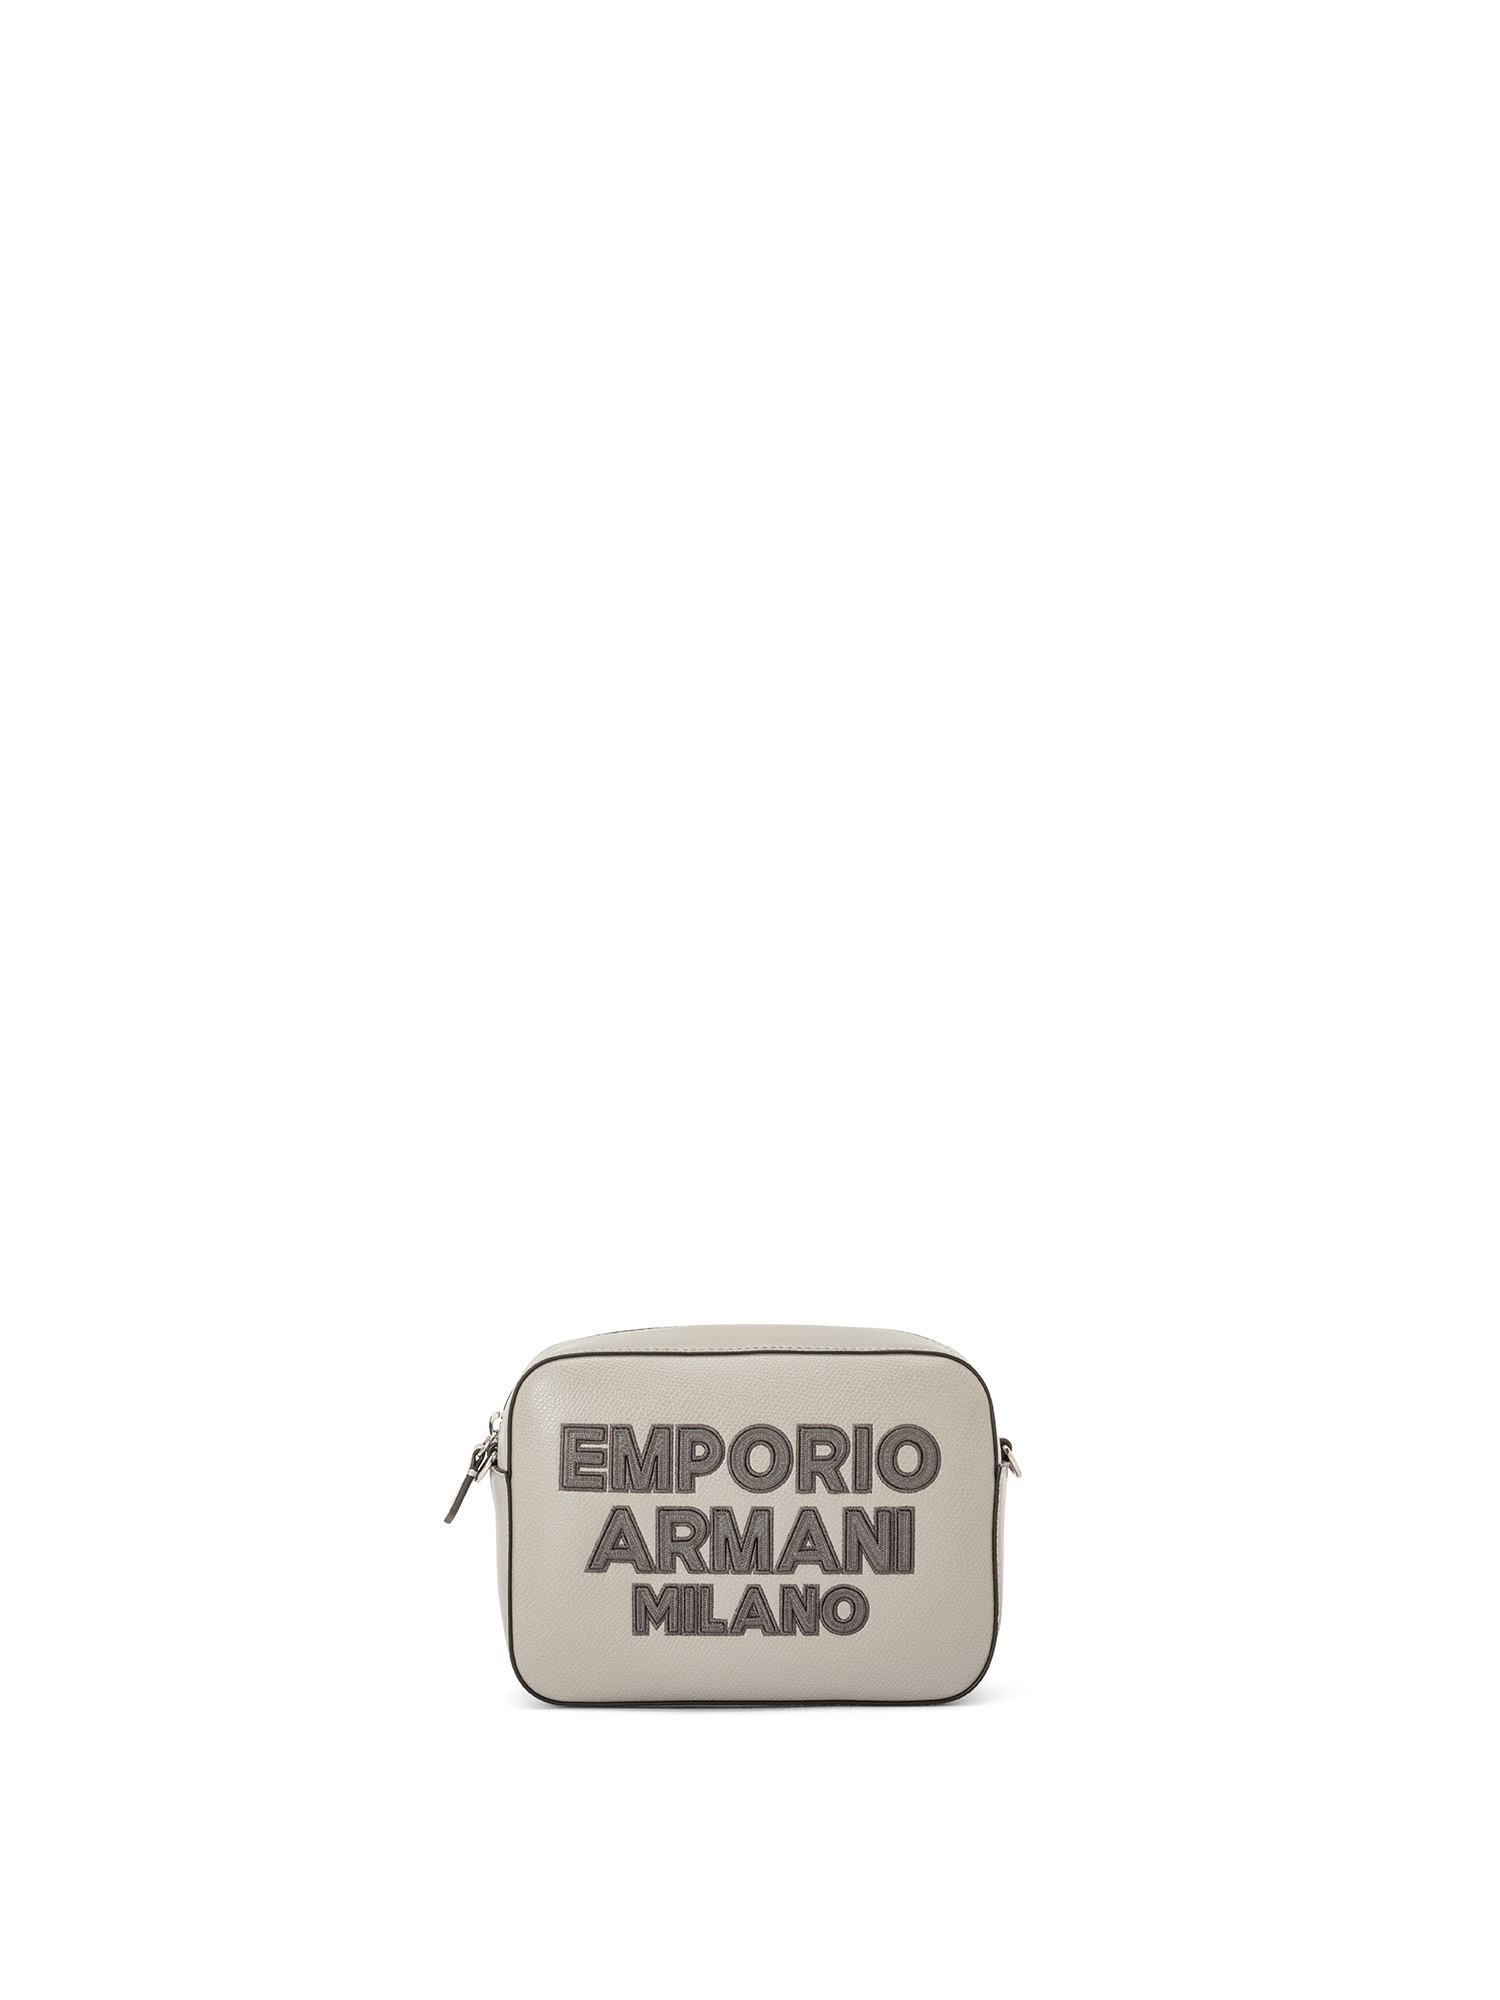 Emporio Armani - Borsa a tracolla con ricamo logo, Grigio, large image number 0